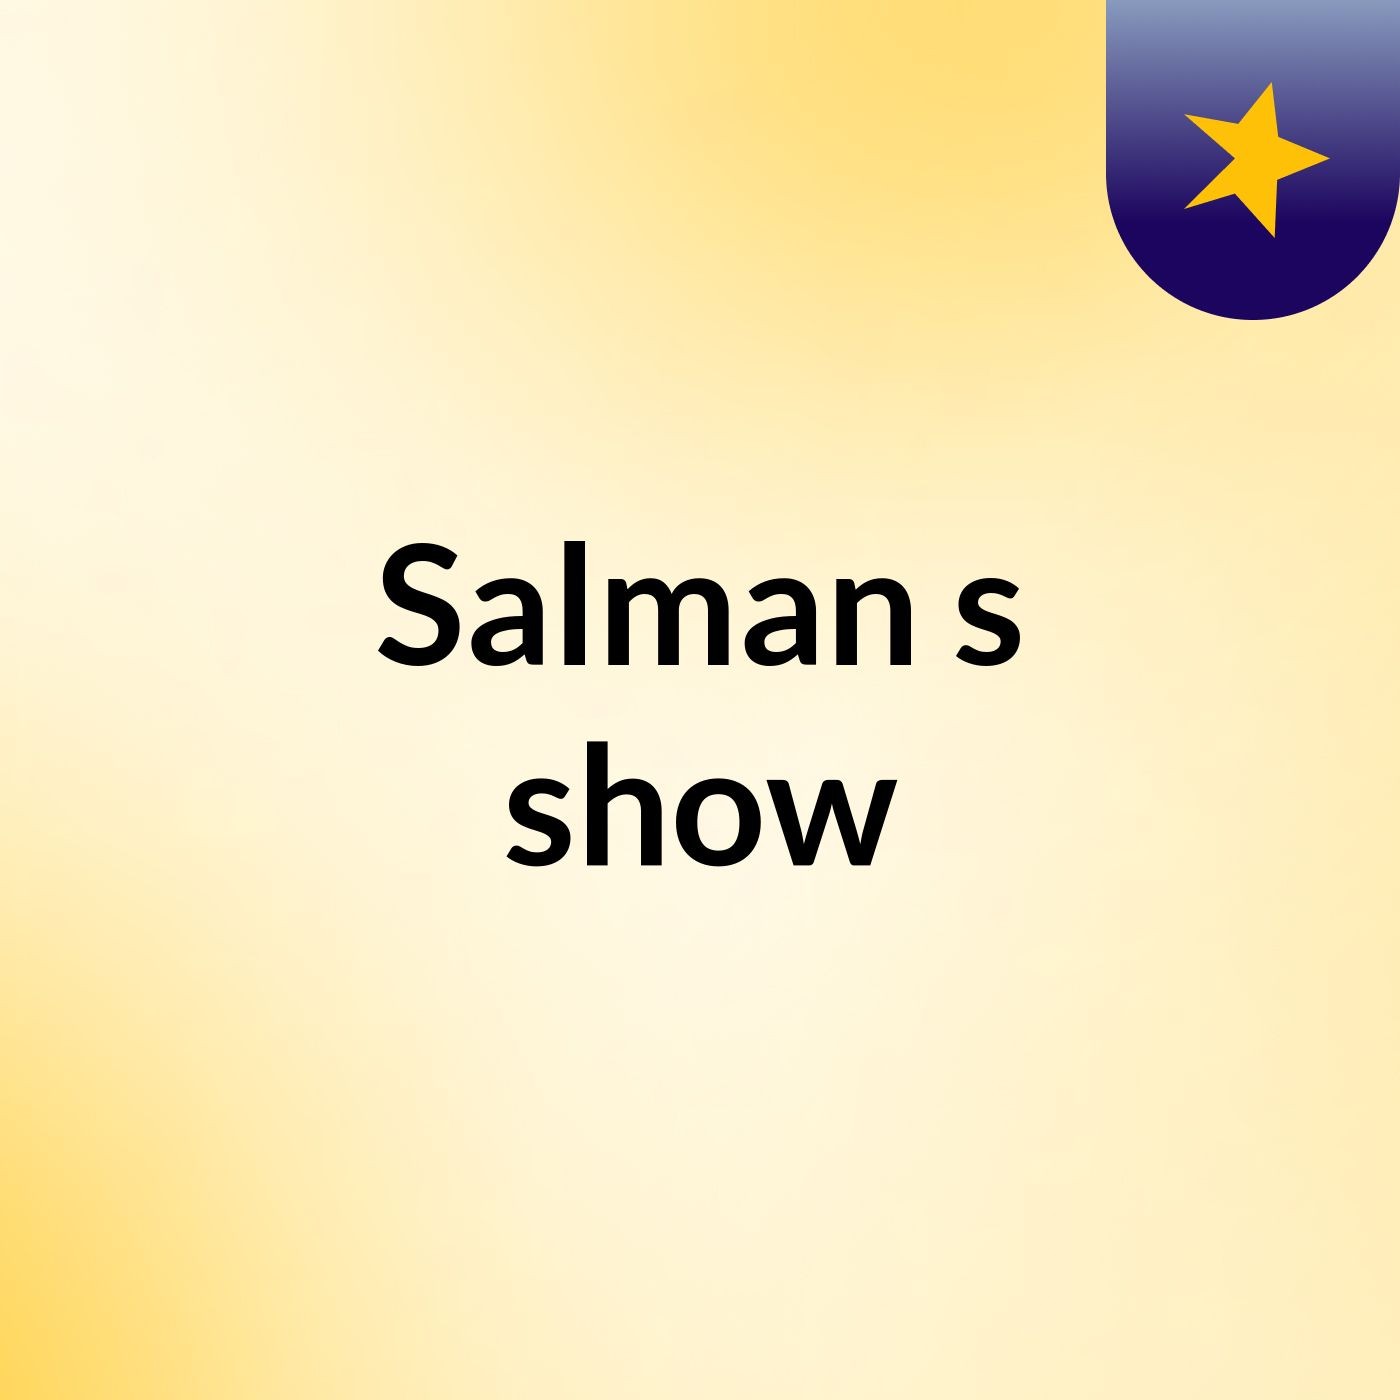 Salman's show